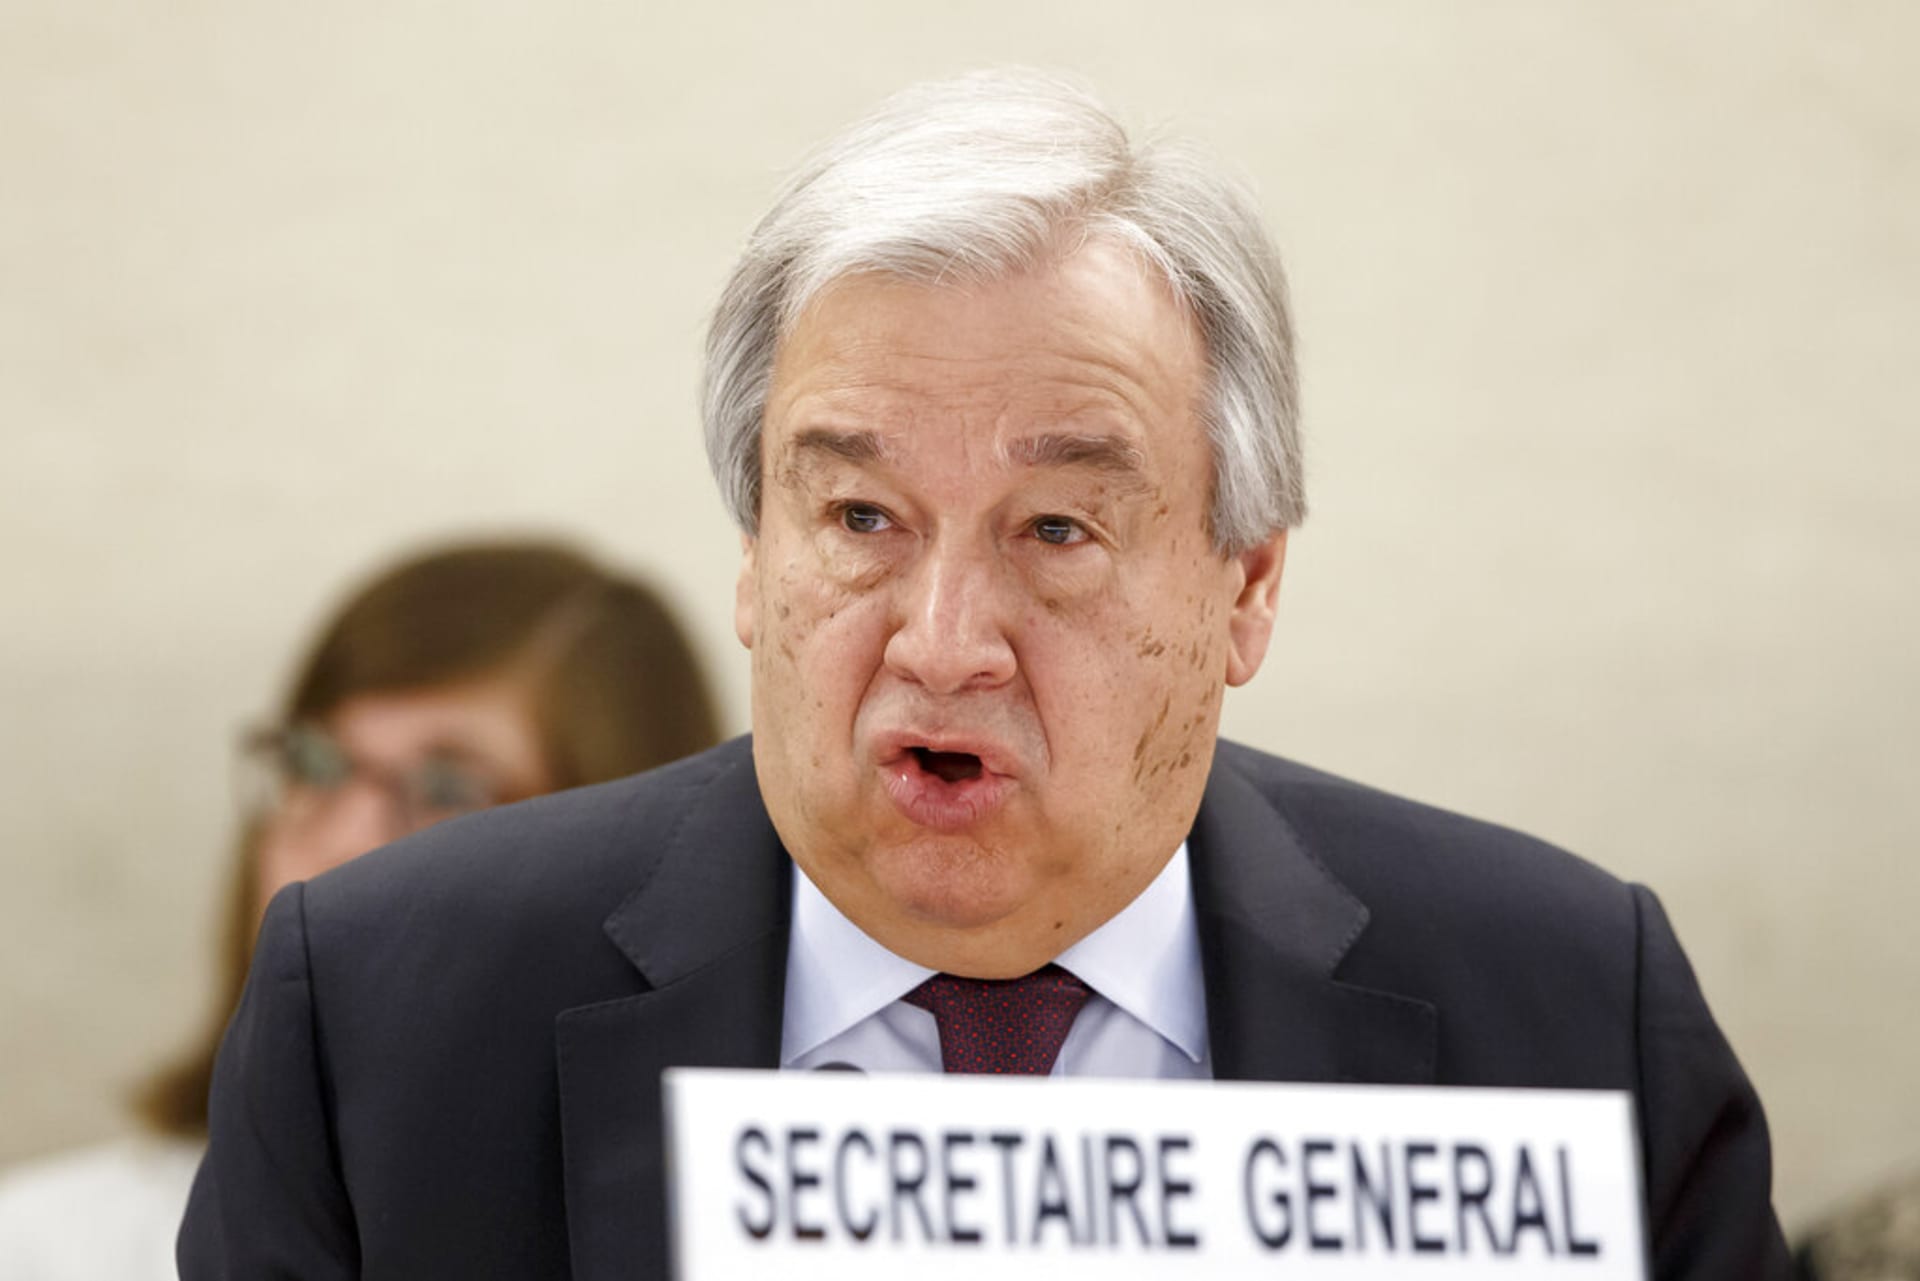 Generální tajemník OSN Antonio Guterres